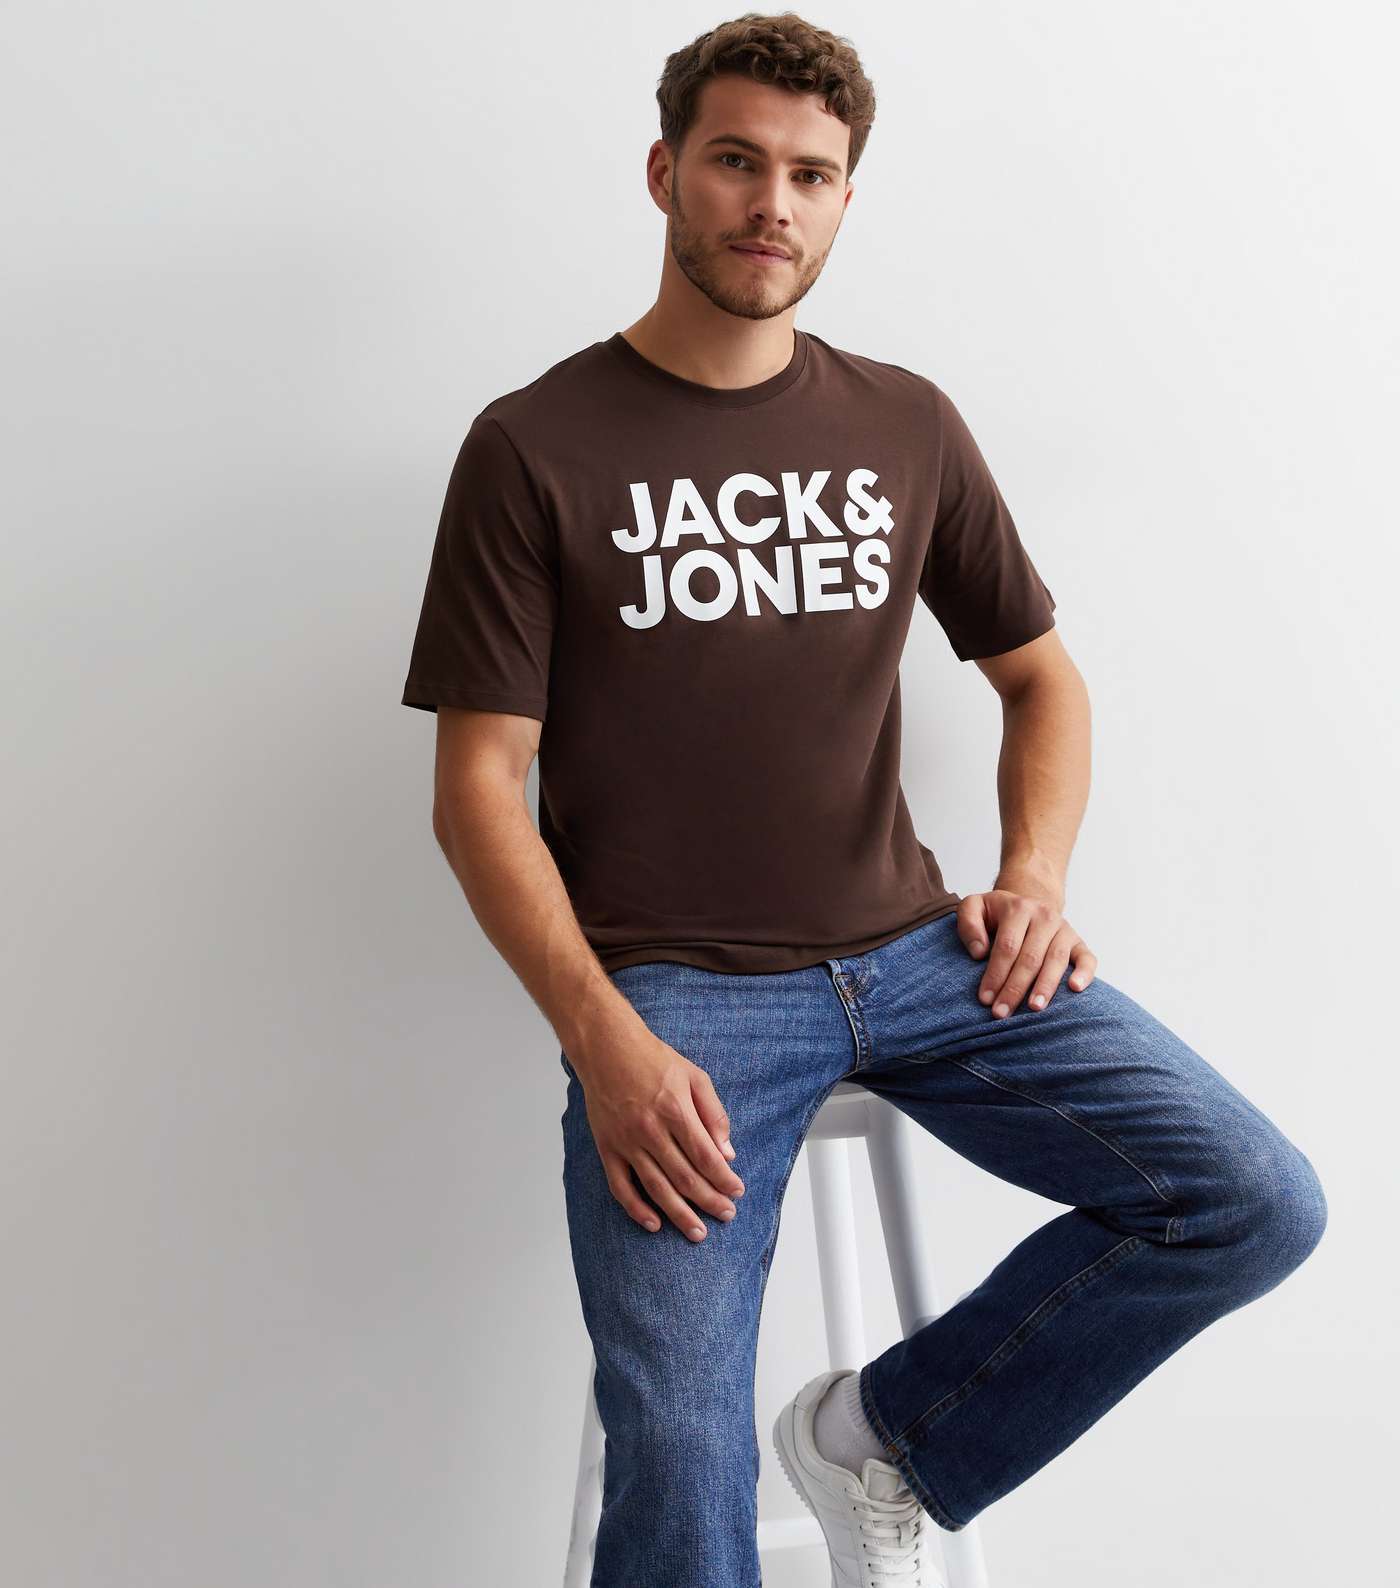 Jack & Jones Dark Brown Cotton Logo T-Shirt Image 2